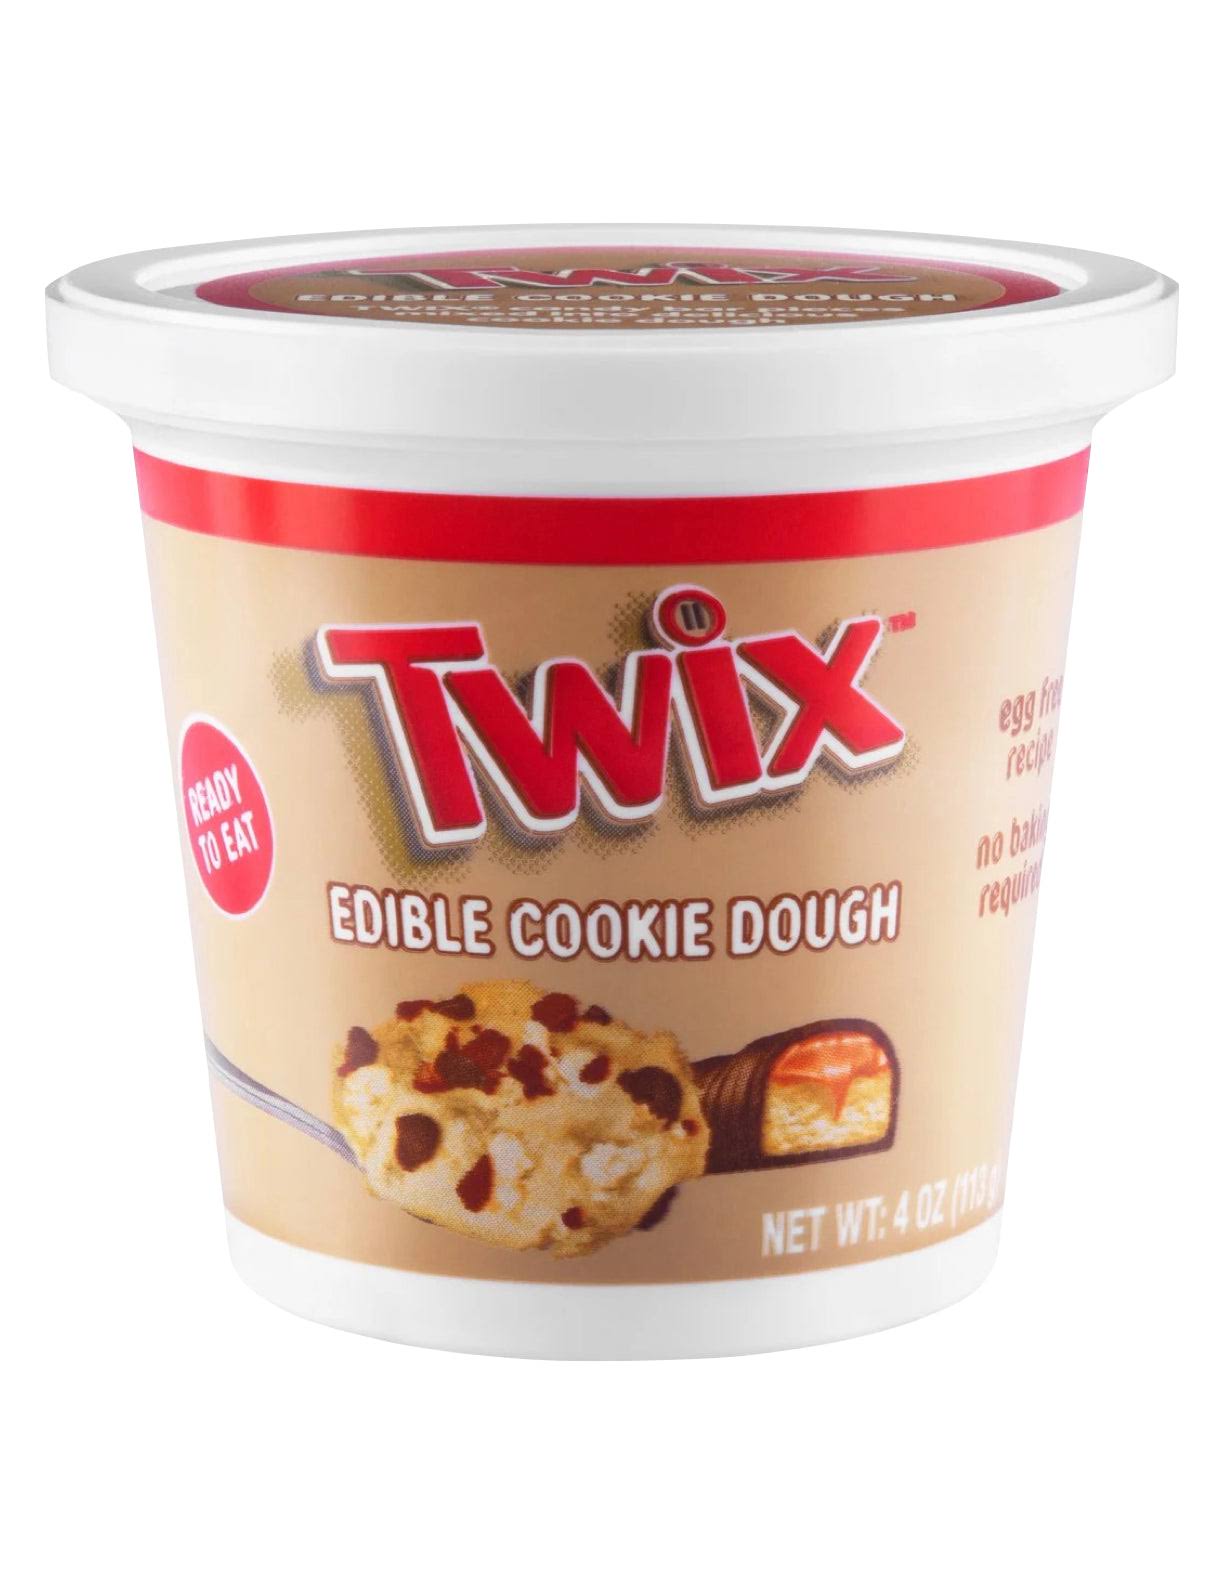 Edible Cookie Dough Twix